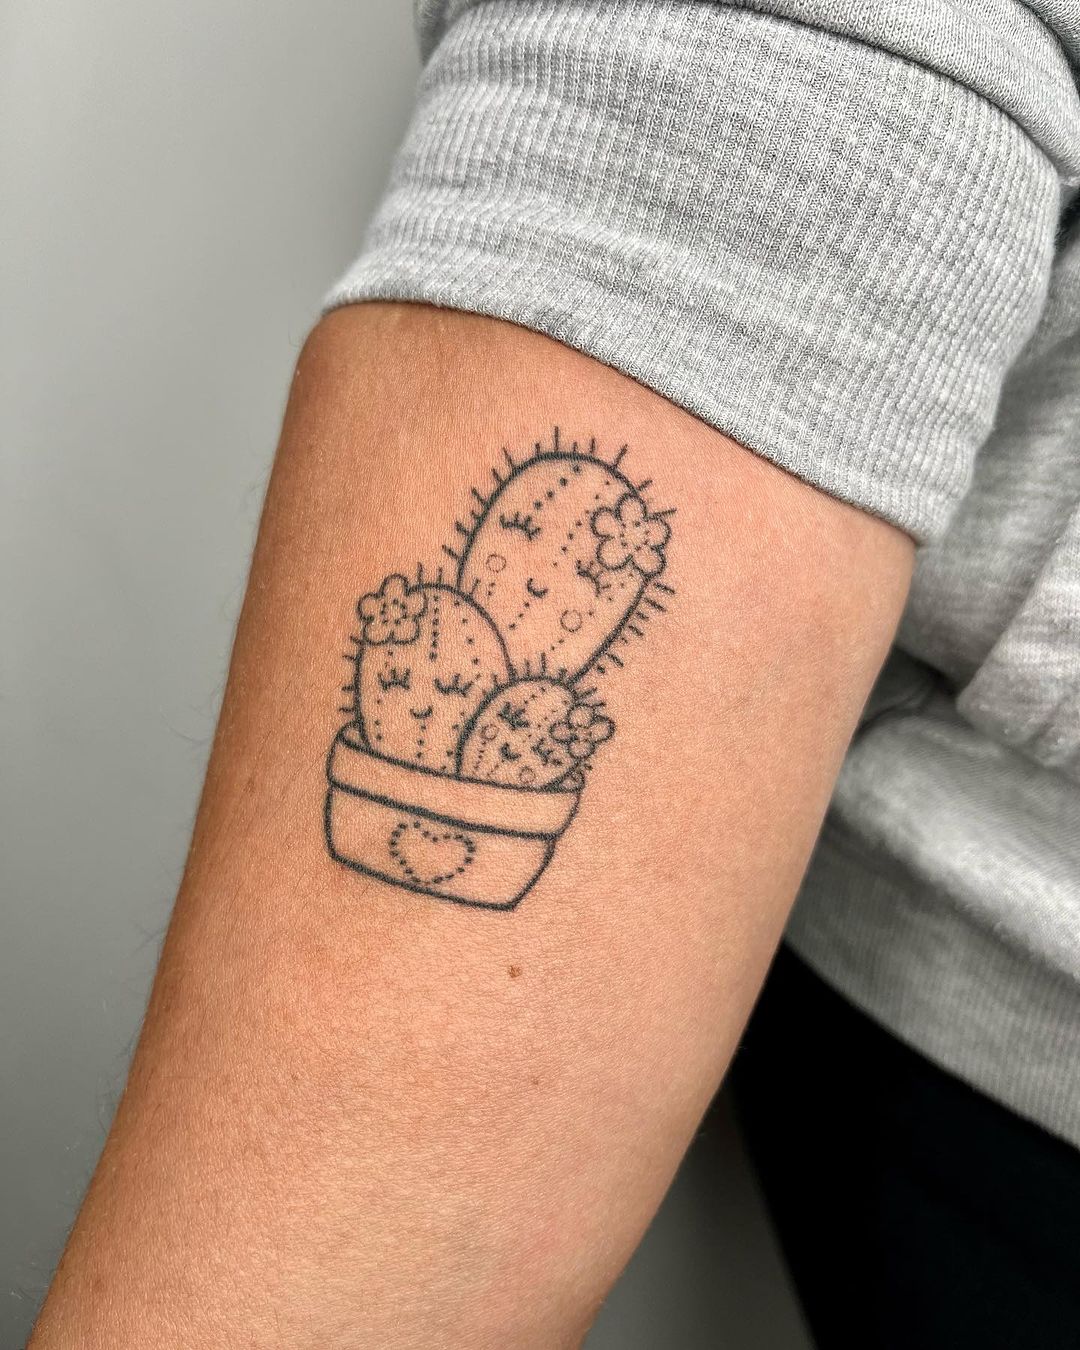 Cuddly Cactus Tattoo